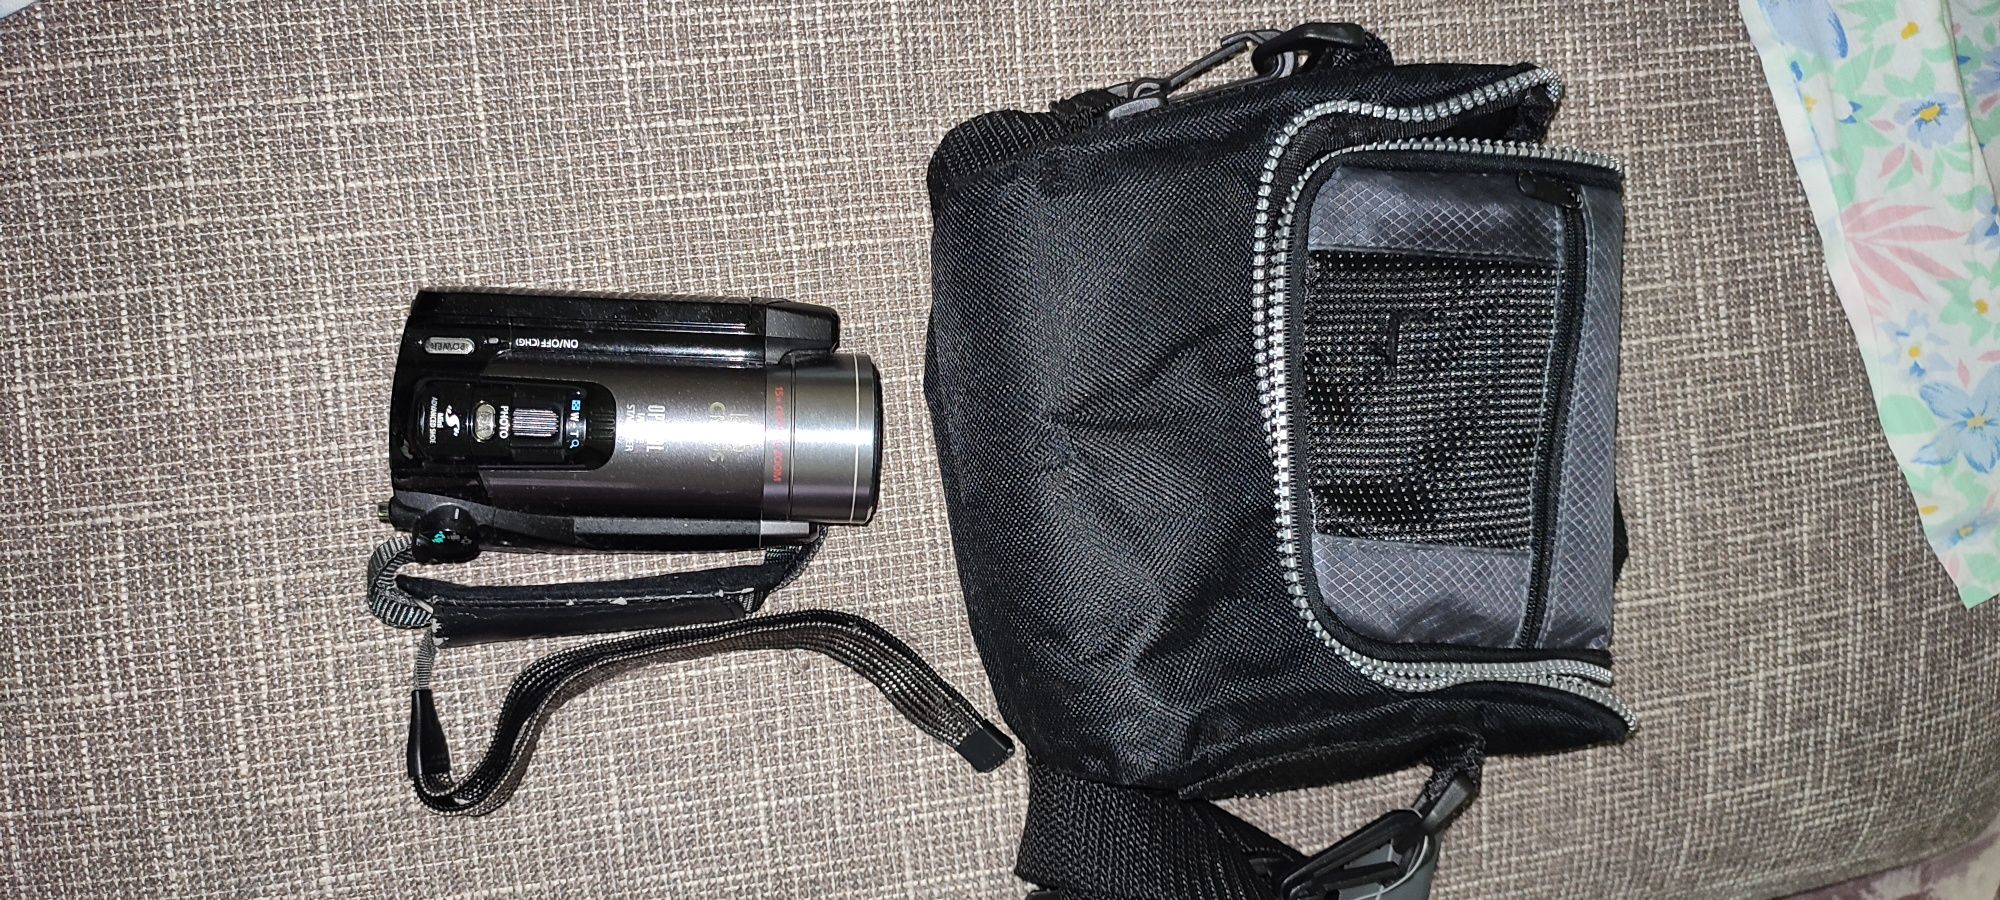 Камера Canon Legria HF200